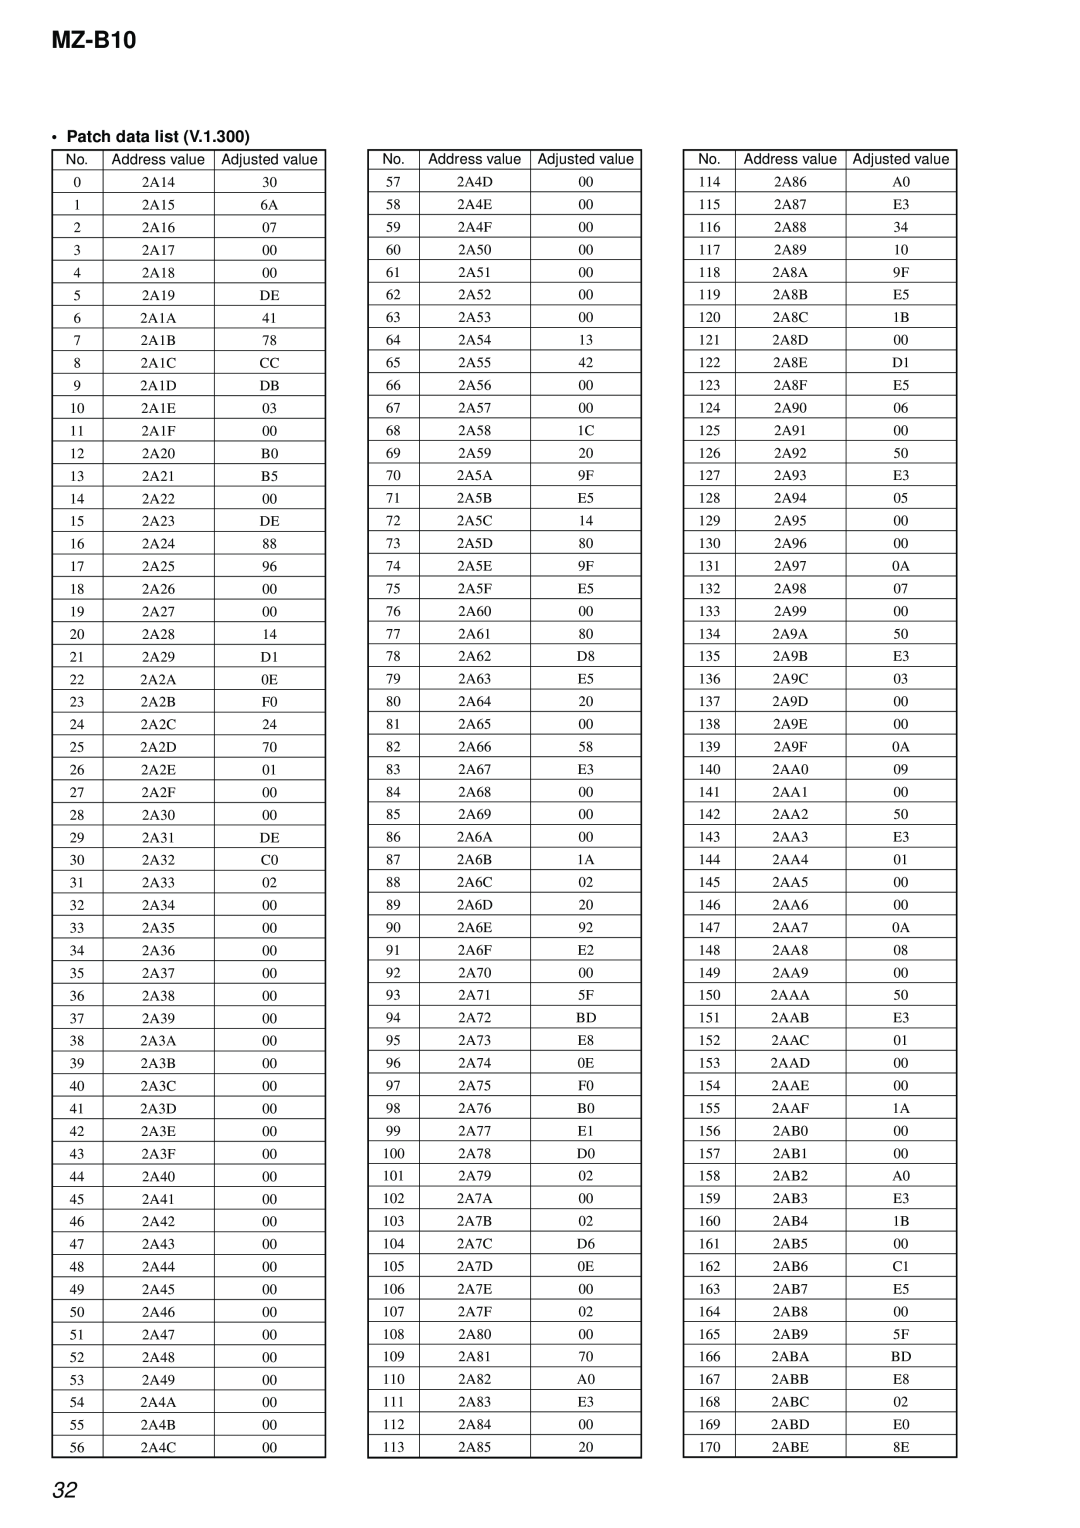 Sony MZ-B10 service manual Patch data list, Address value, Adjusted value 